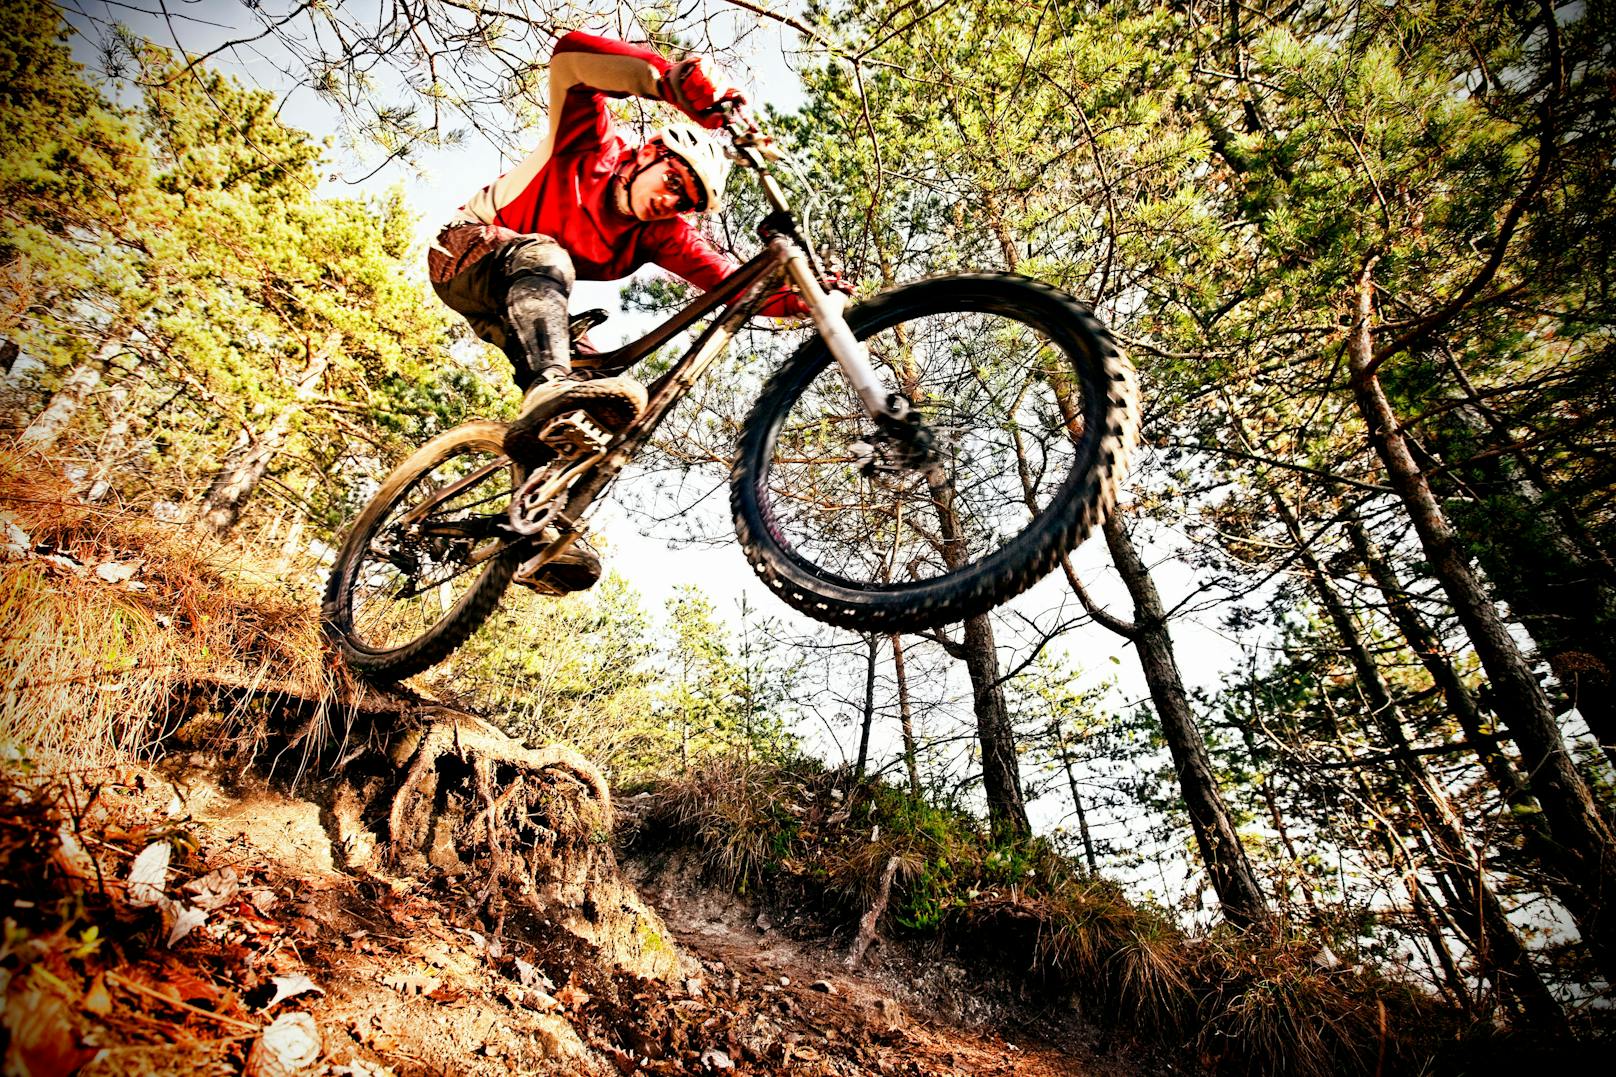 Adrenalinkick! Neuer Uphill Trail begeistert Biker